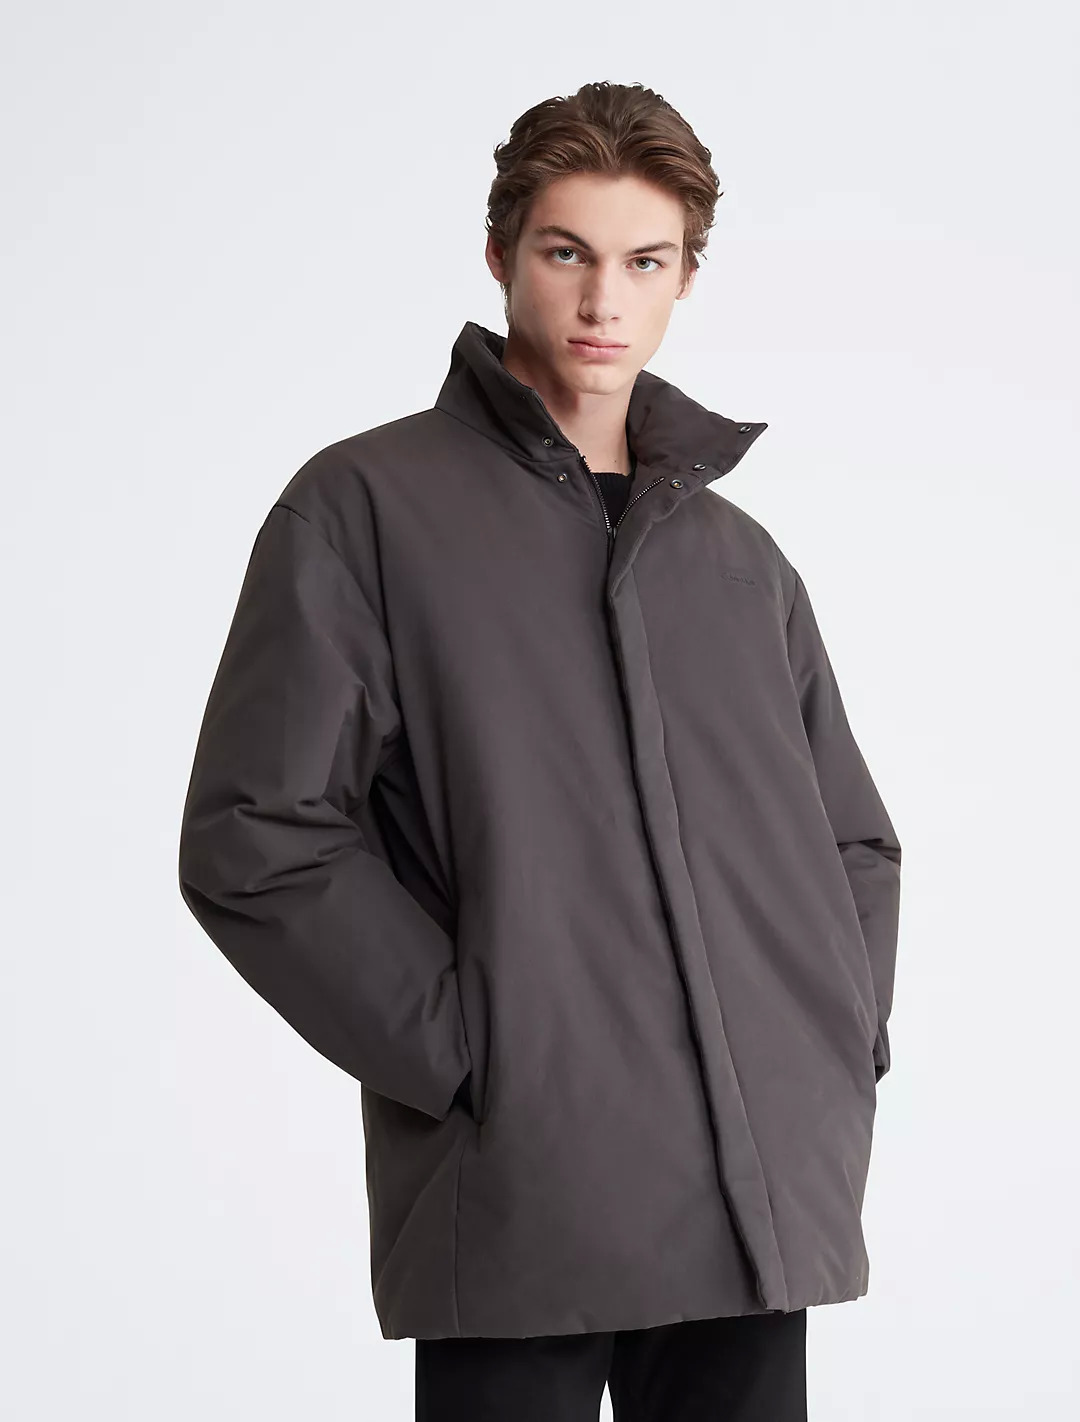 Calvin Klein: Men's and Women's Sale - Men's Cotton Nylon Blend Coat (Phantom) $36.48 + Free Ship $75+